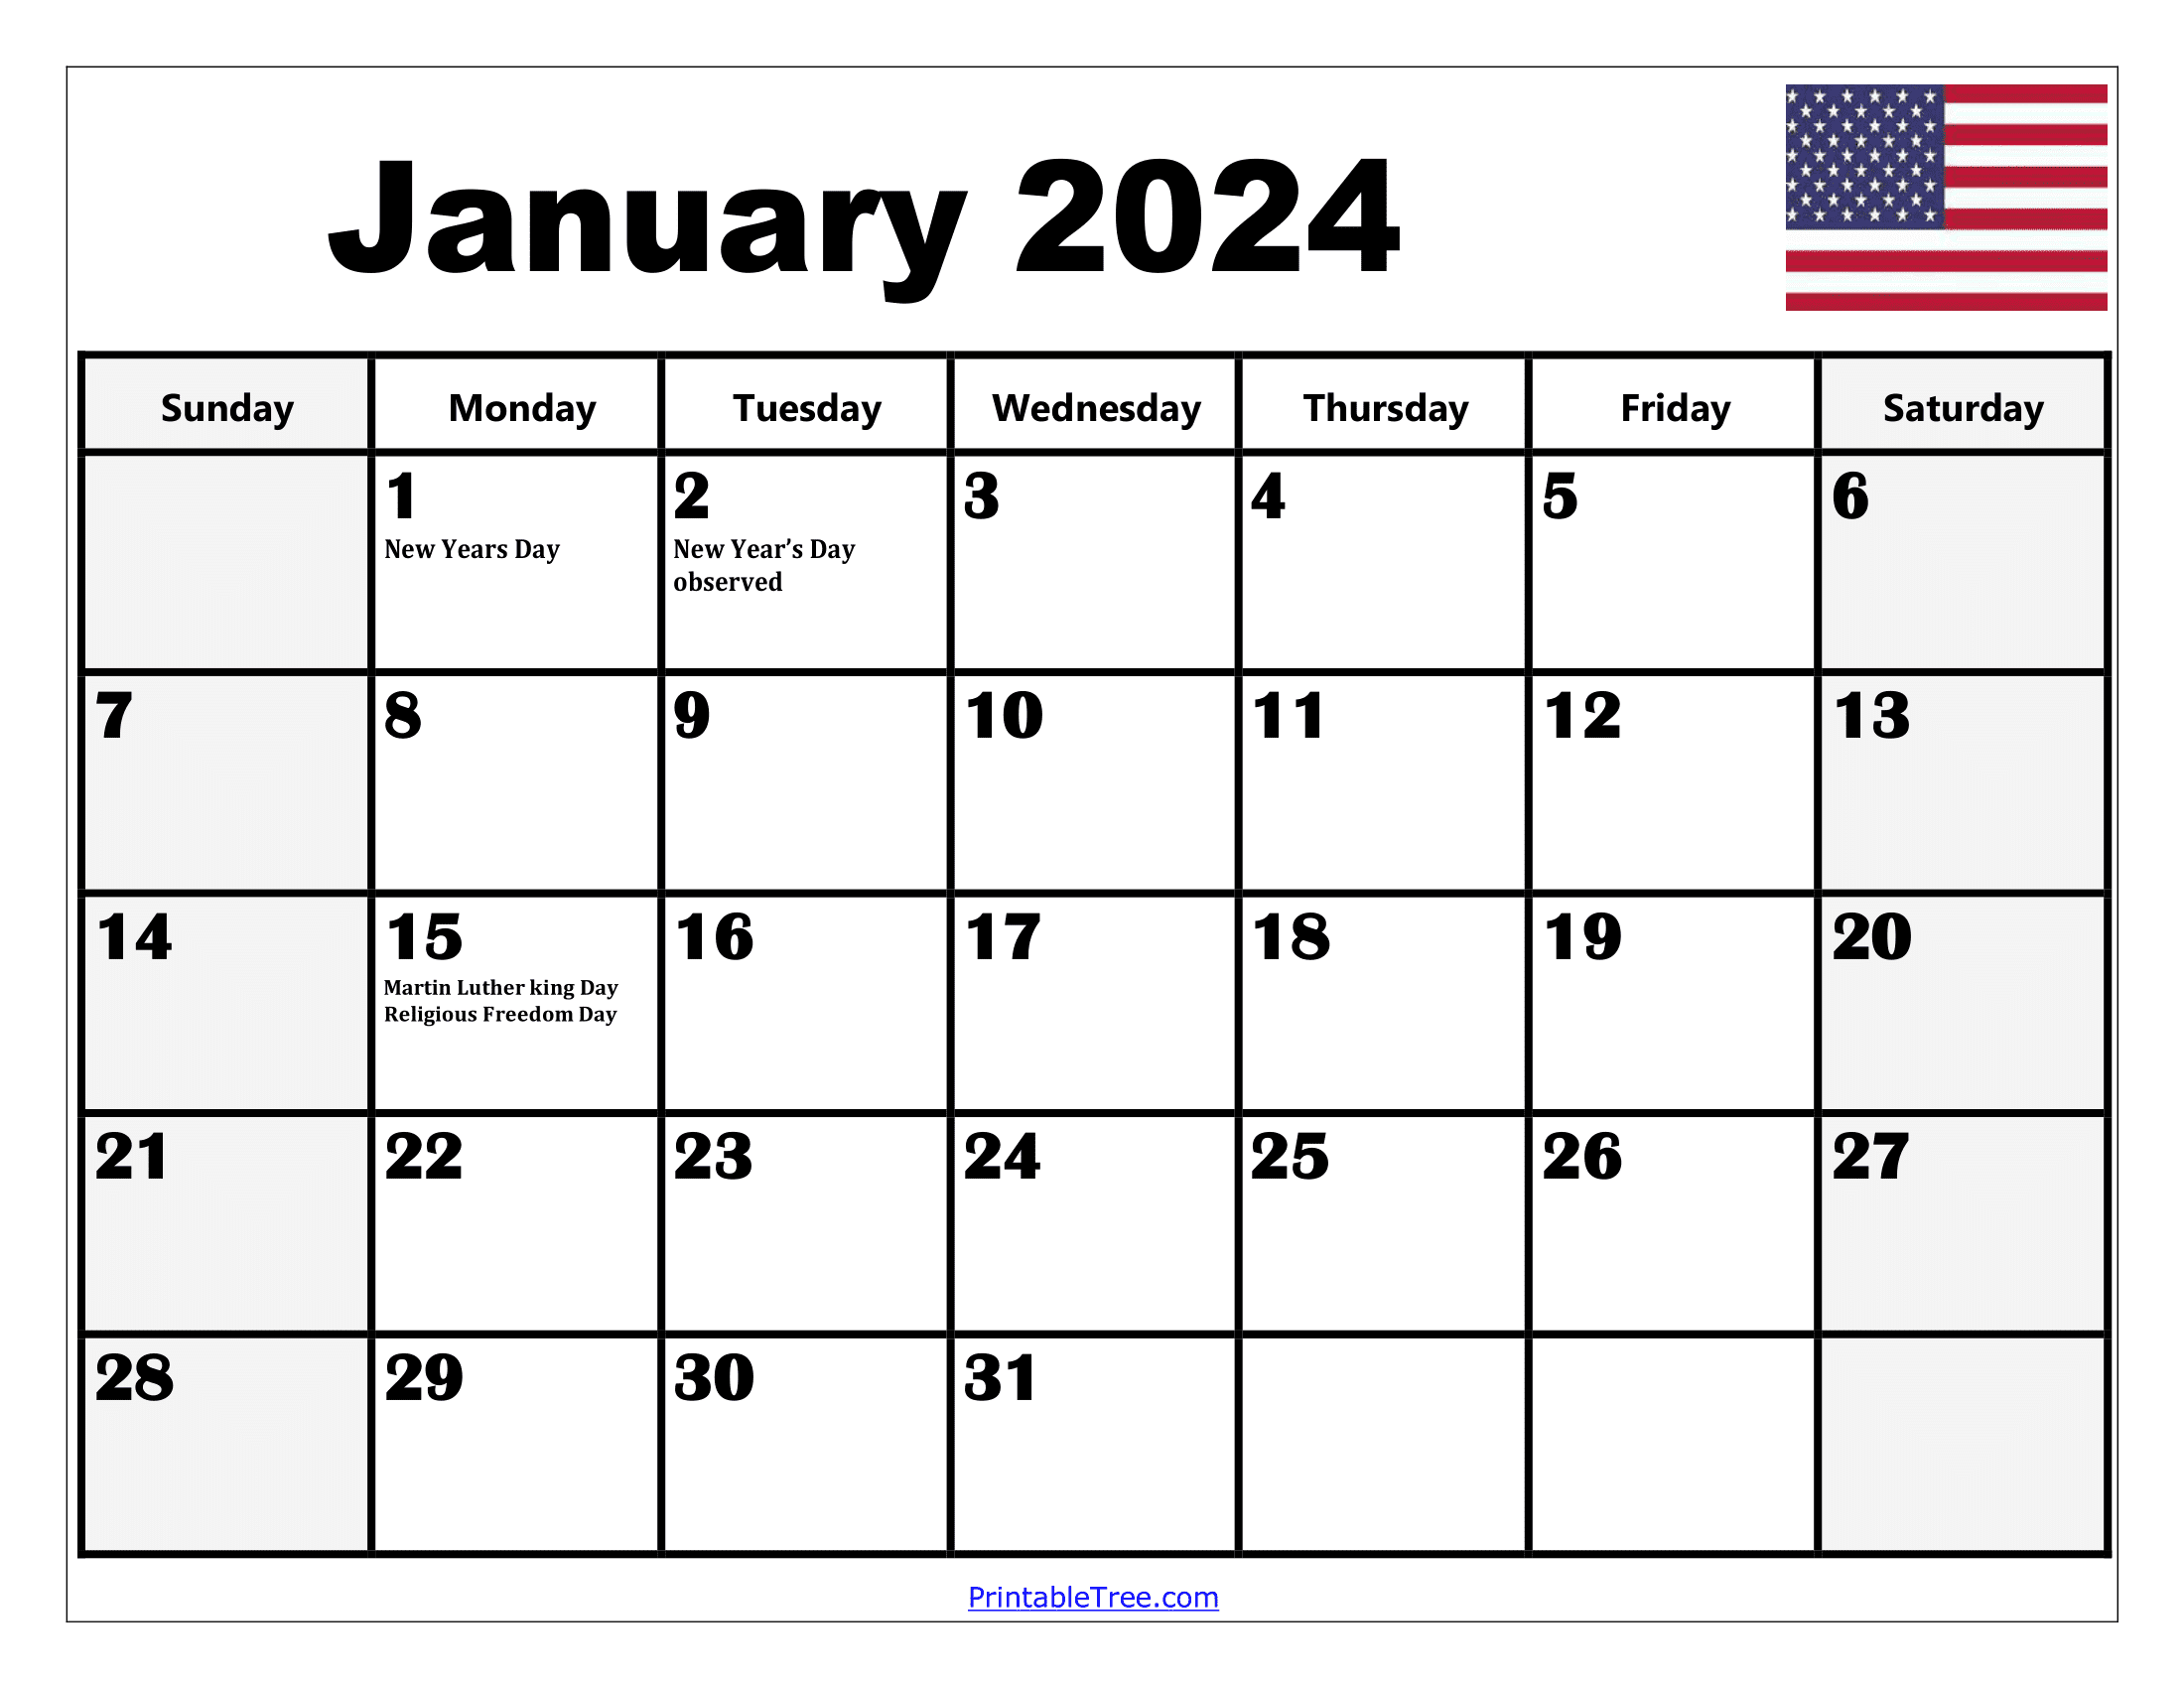 January 2024 Calendar Printable Pdf Template With Holidays for January 2024 Printable Calendar With Holidays